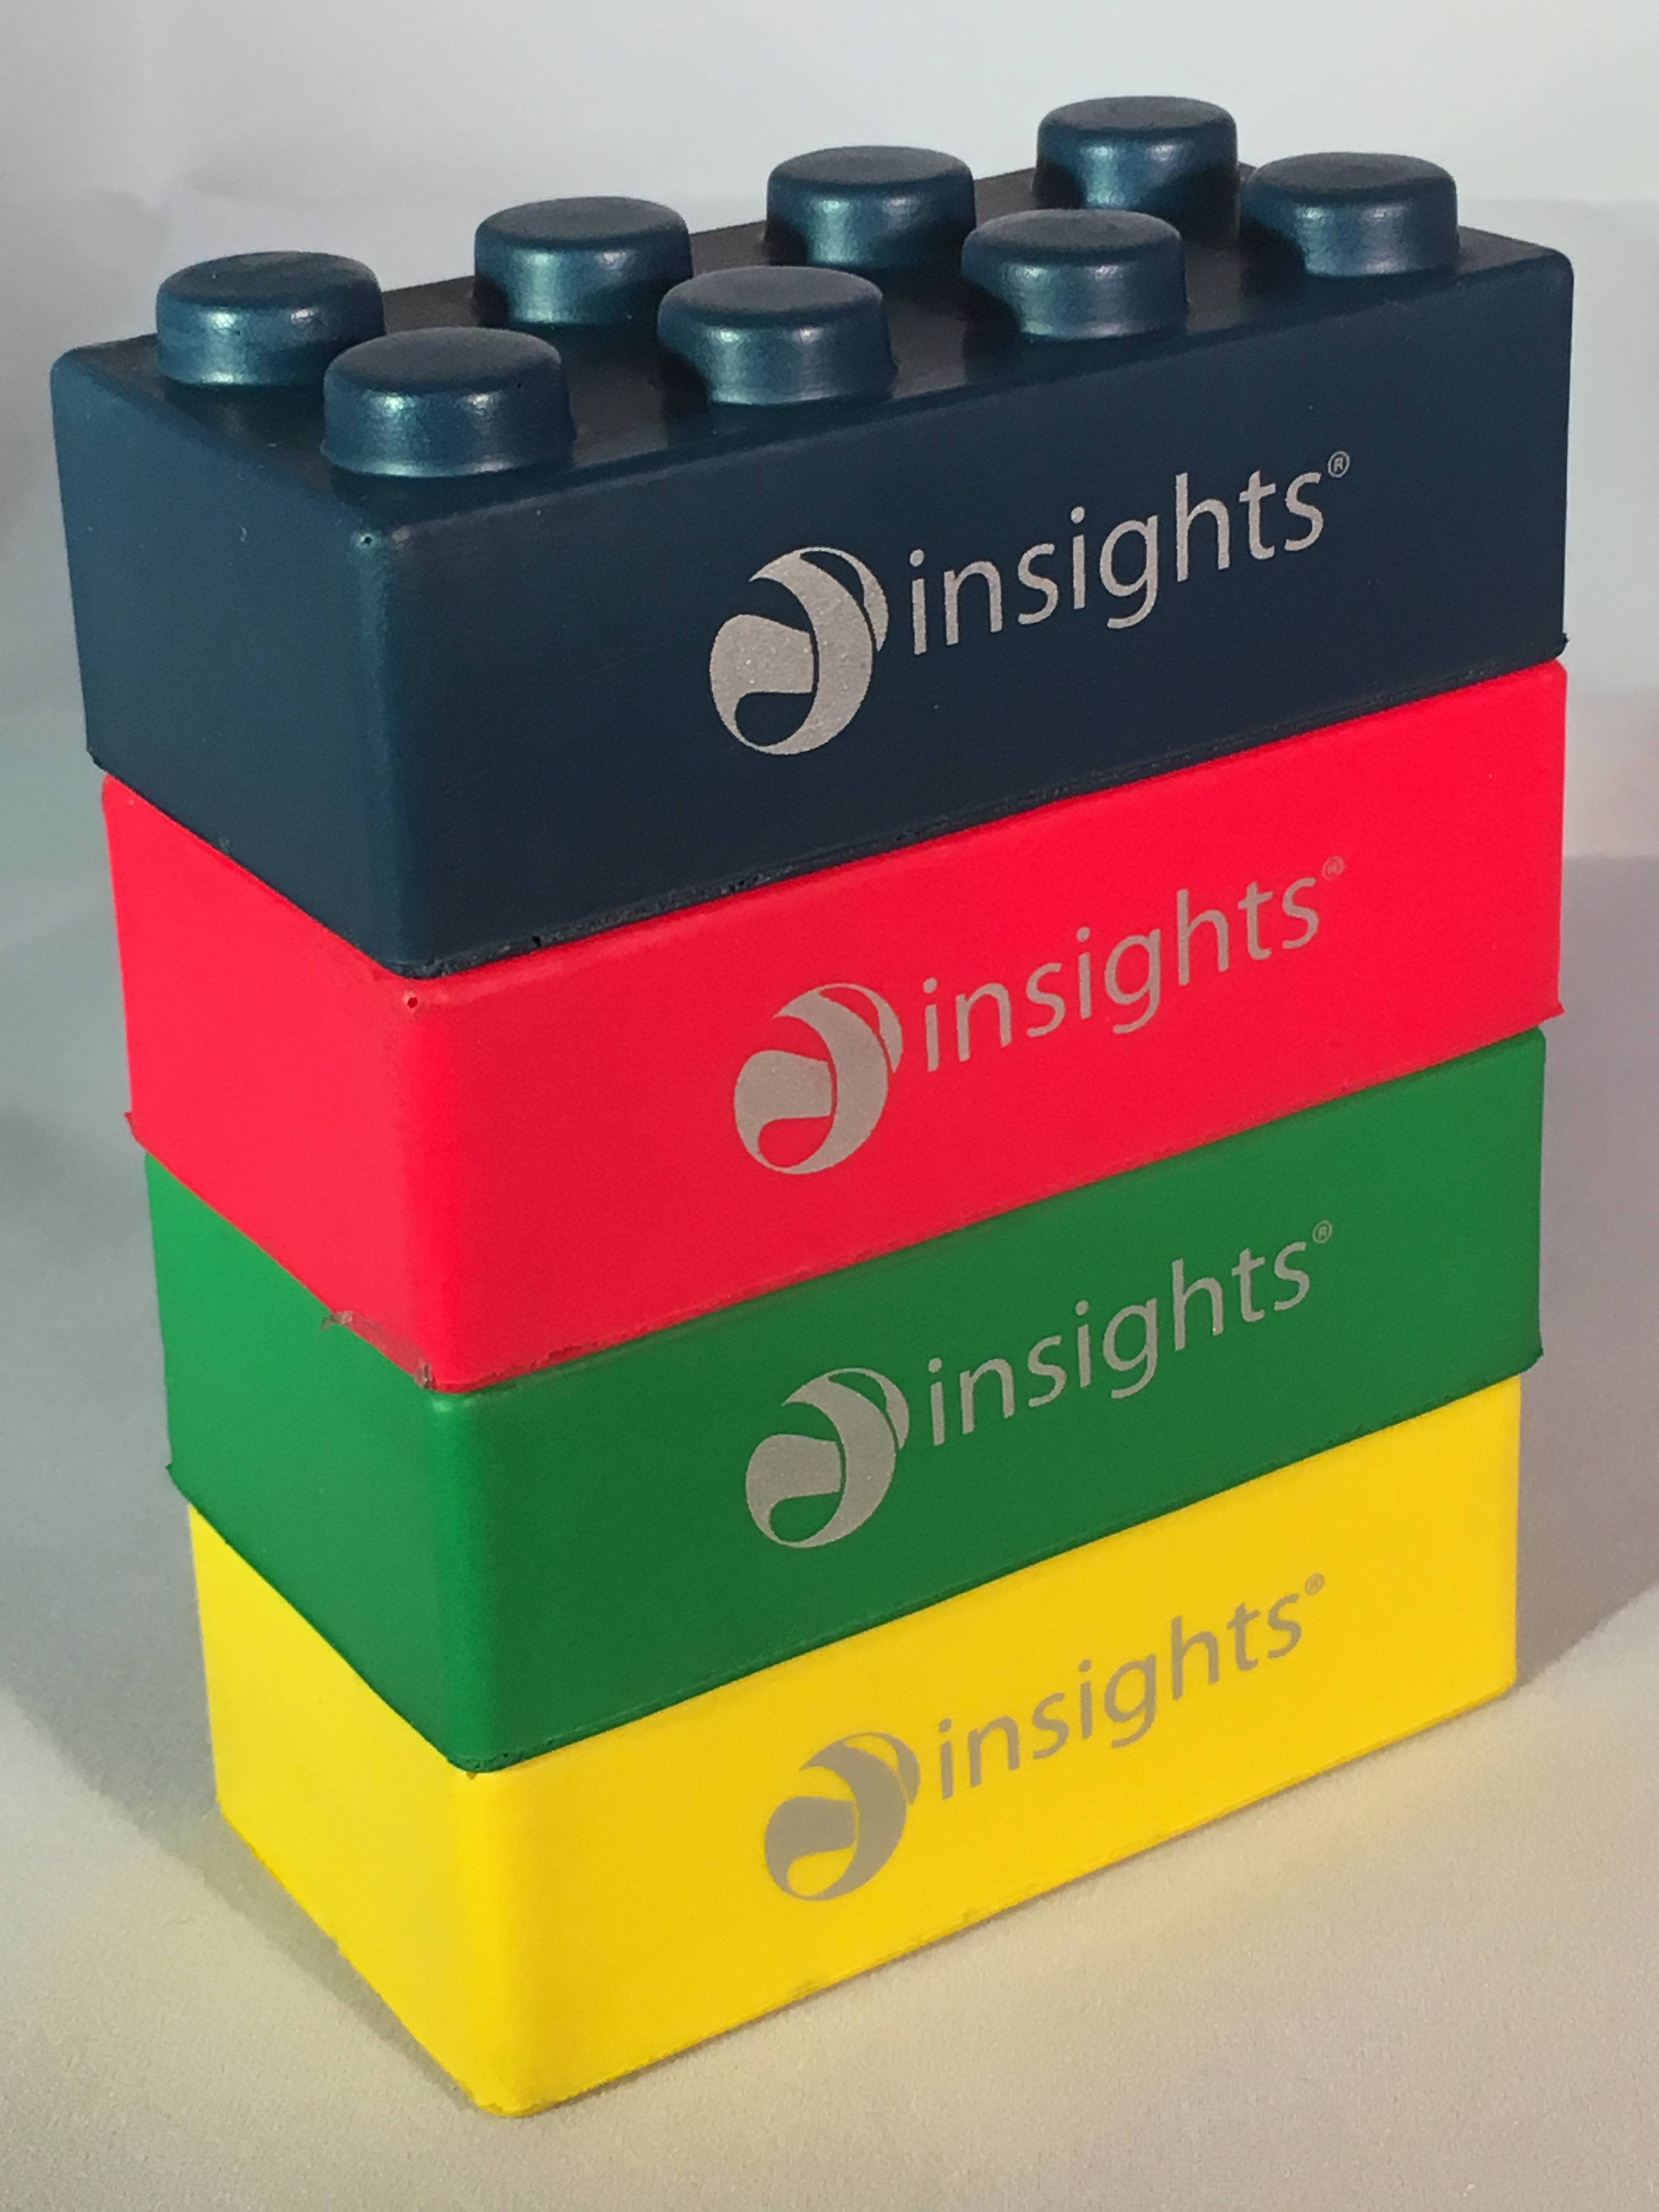 Insights Coloured Blocks